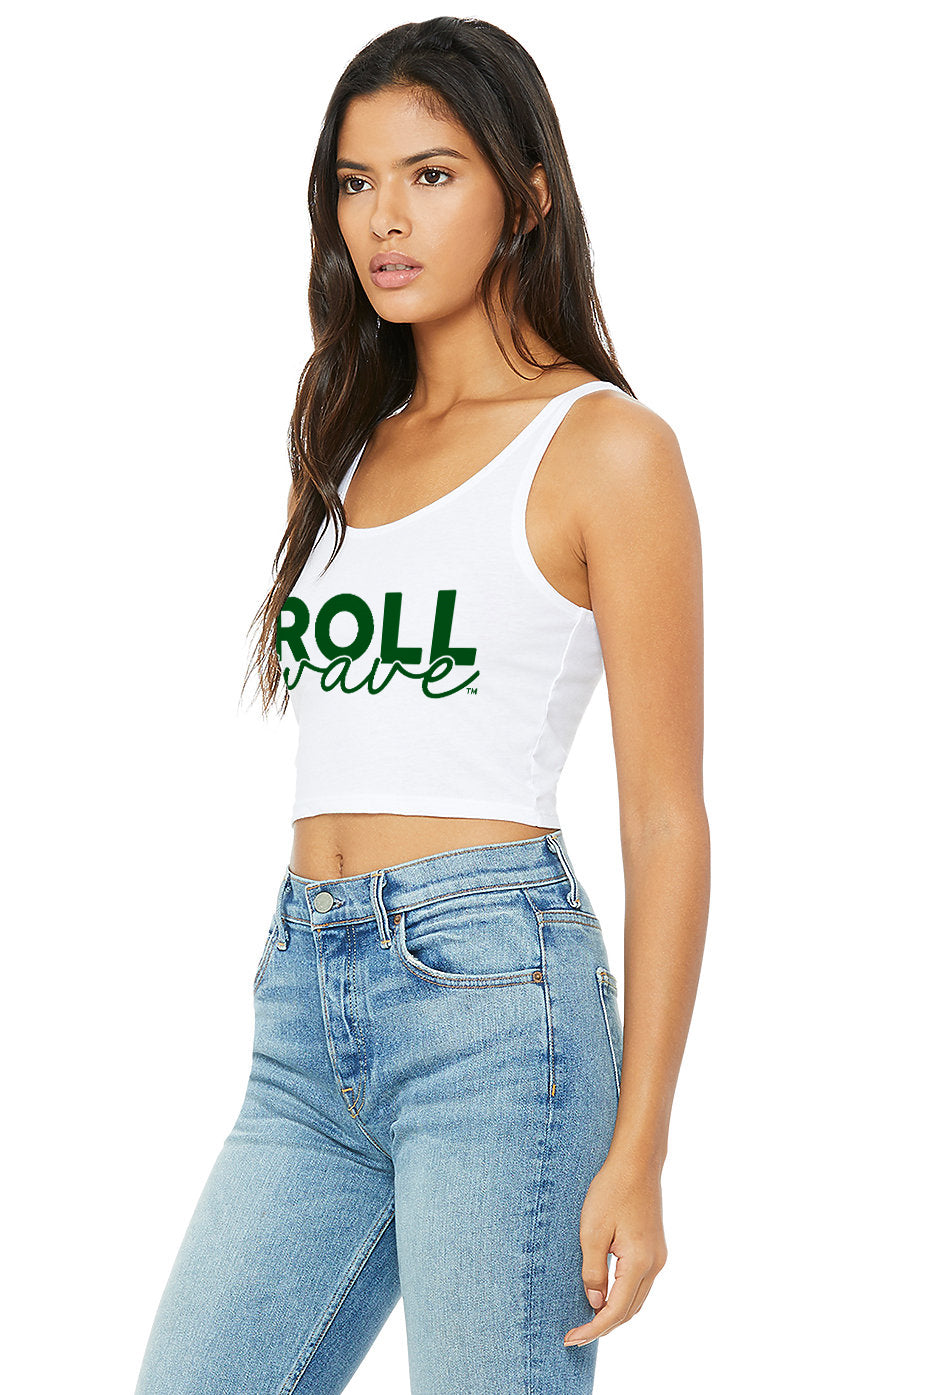 Roll Wave Wavy Shirt